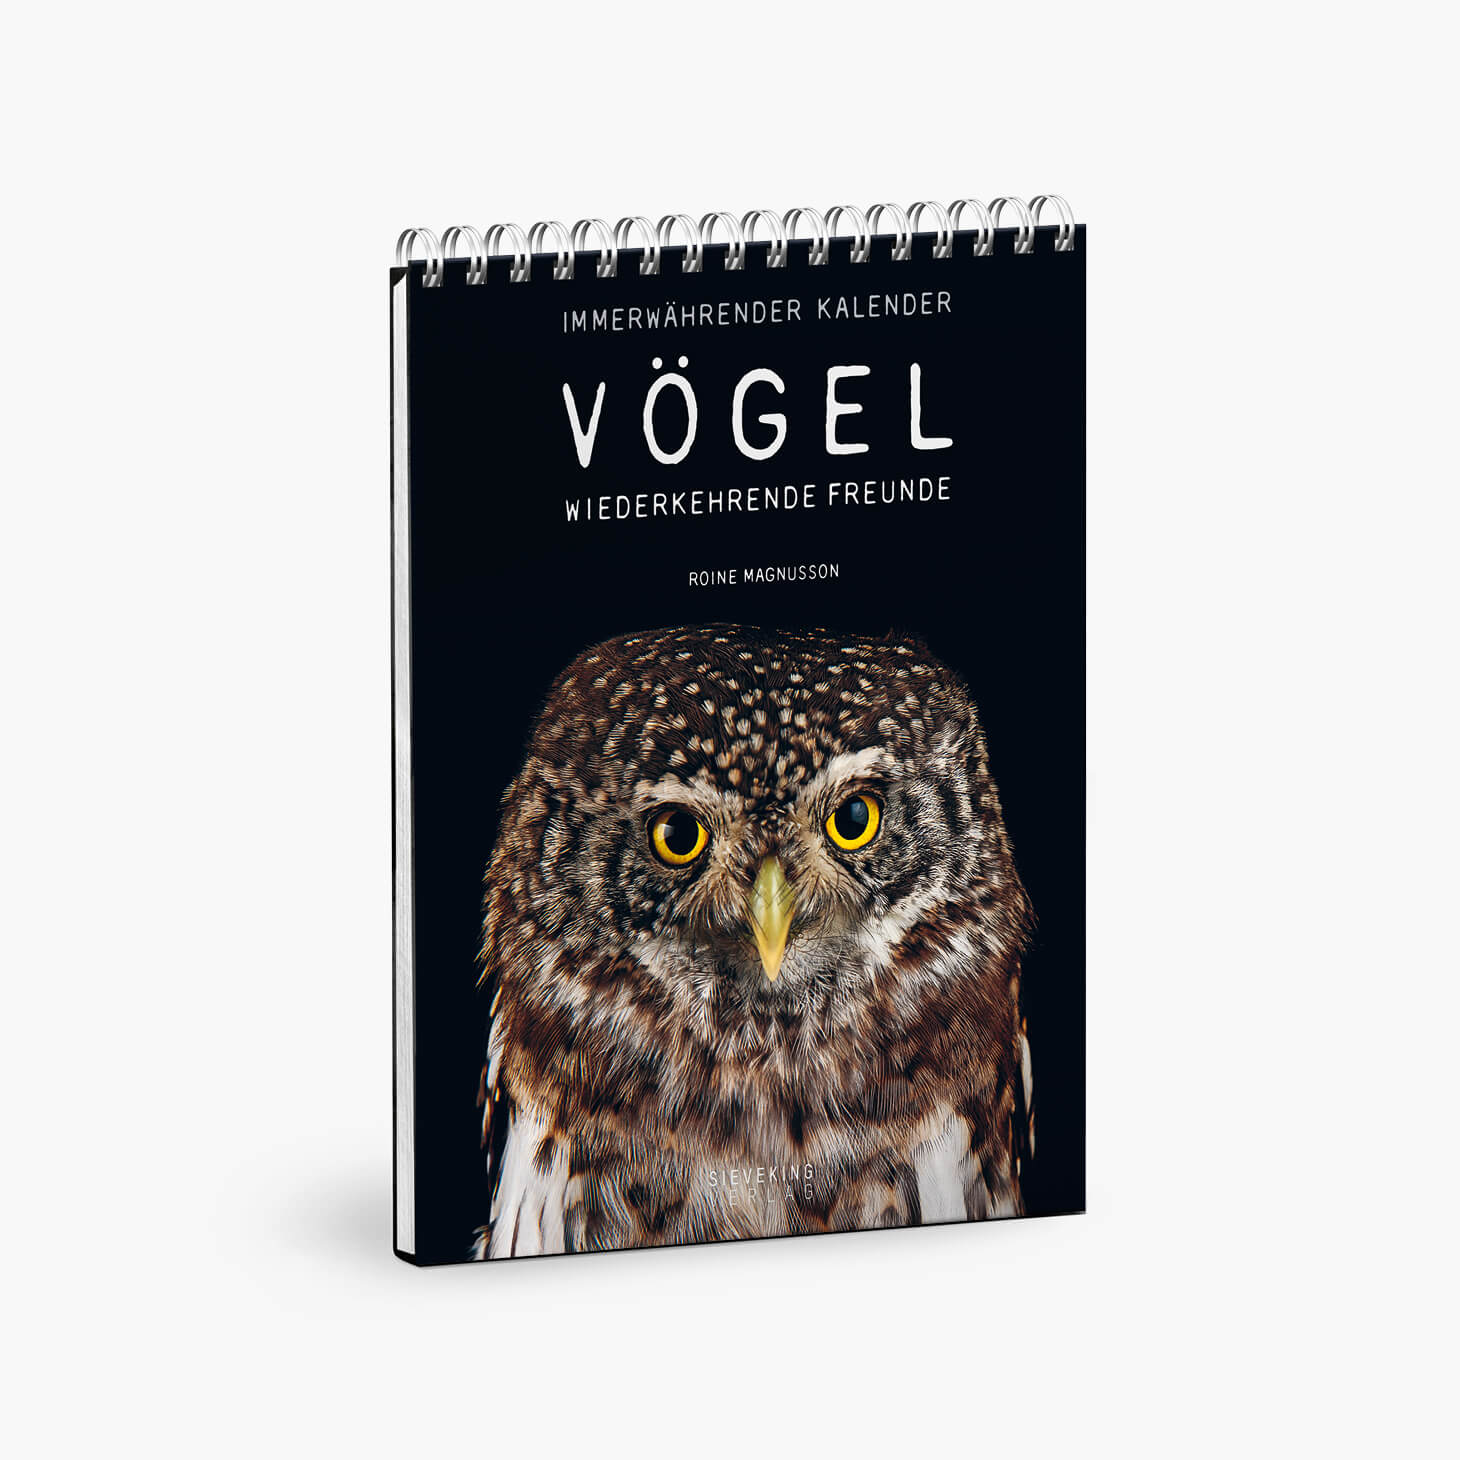 Immerwährender Kalender, Produktbild, Vögel, Sieveking Verlag